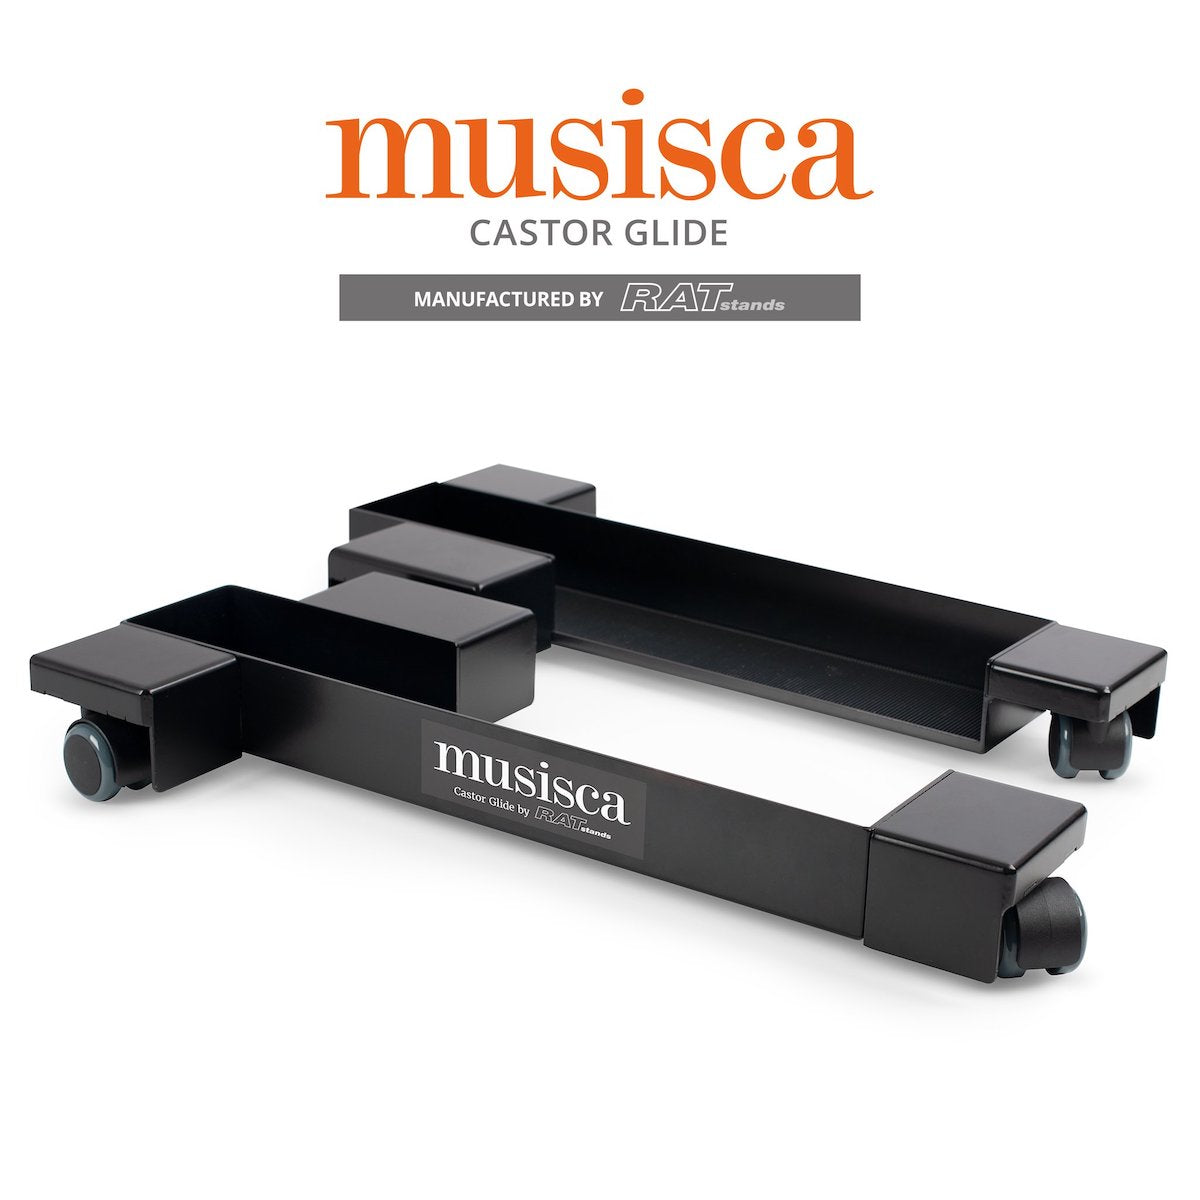 Musisca CASTOR-GLIDE Digital Piano Castors